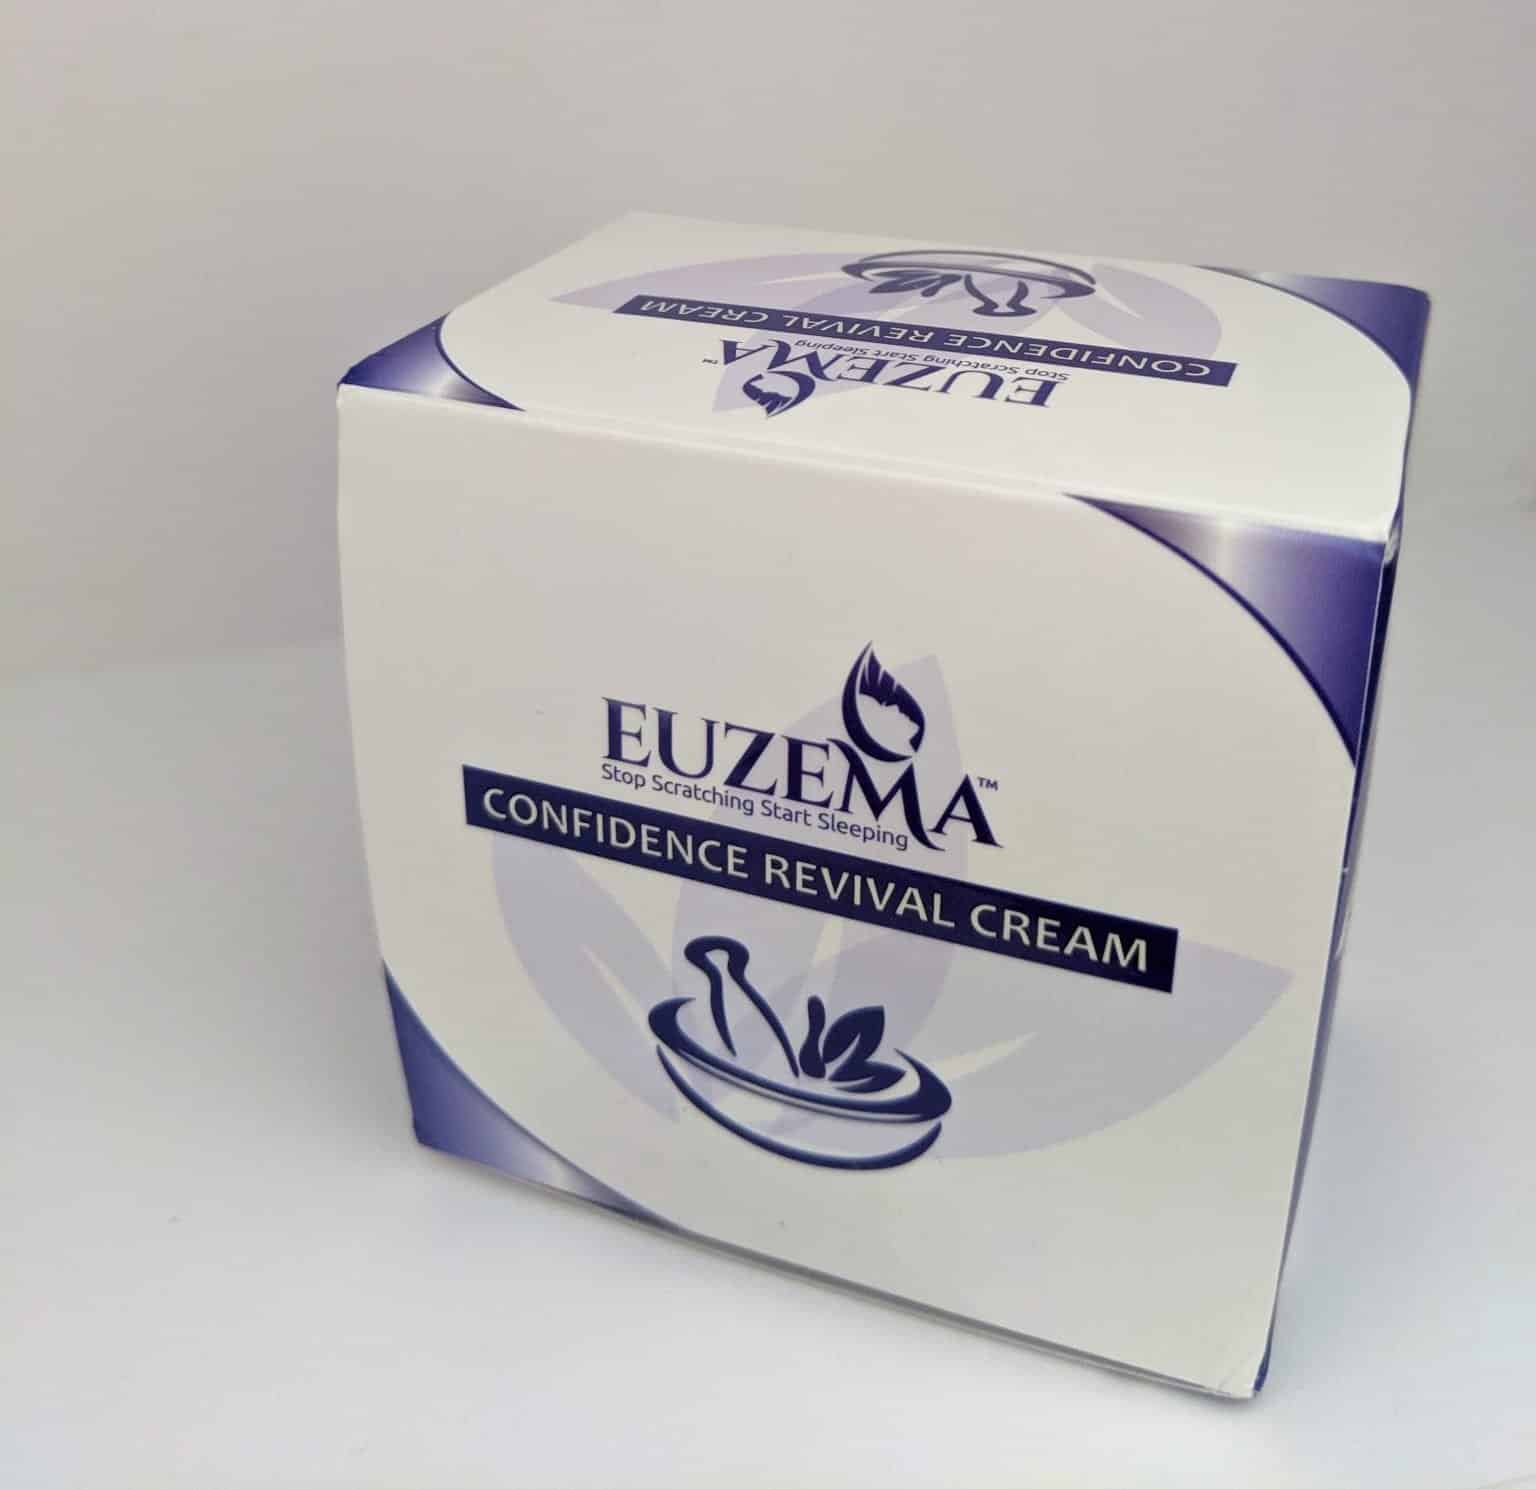 Is Euzema Revival Cream Worth Using For Eczema?